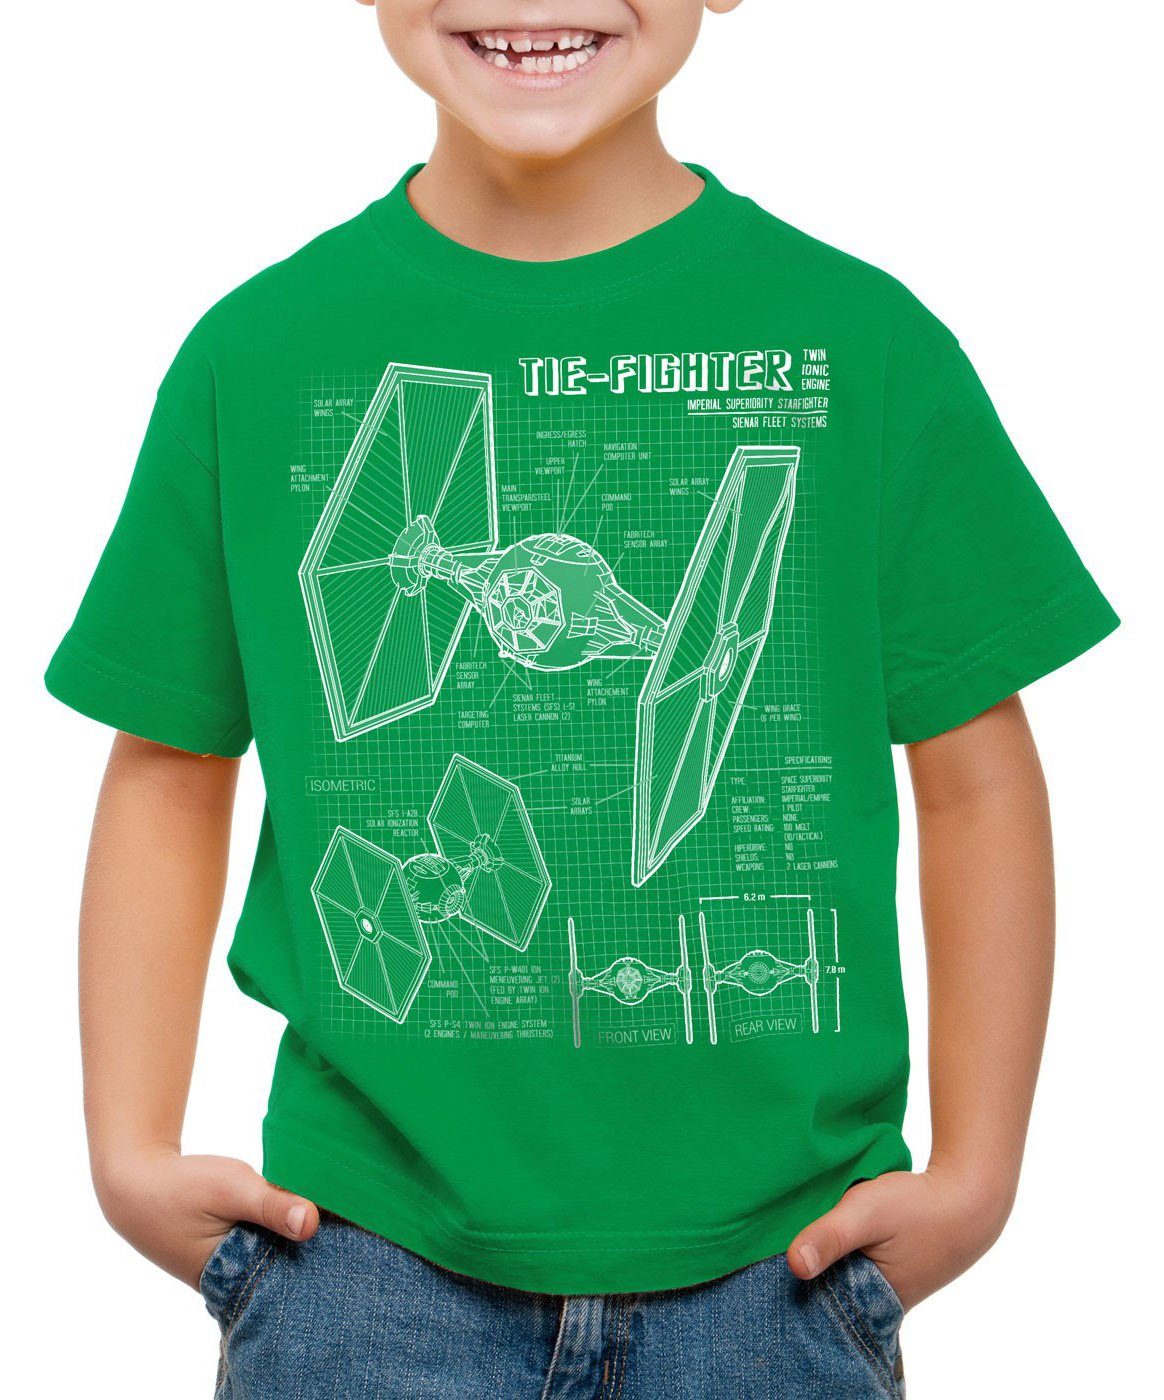 blaupause TIE T-Shirt grün Print-Shirt T-Shirt Jäger style3 fighter Kinder